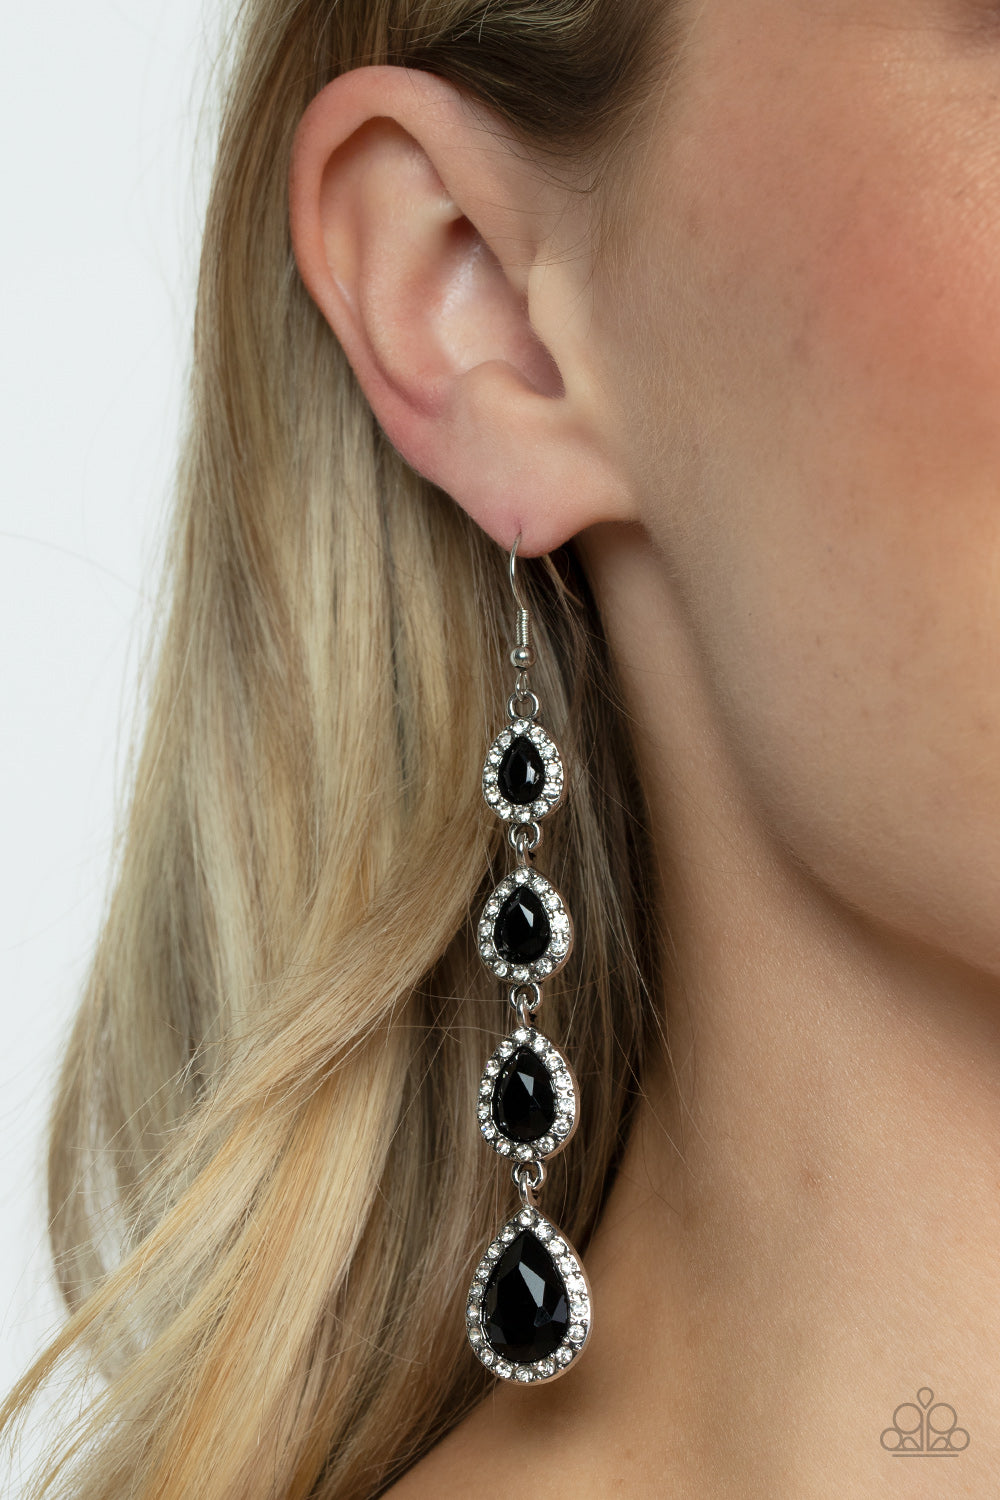 Confidently Classy - Black Rhinestone Earrings Paparazzi Accessories